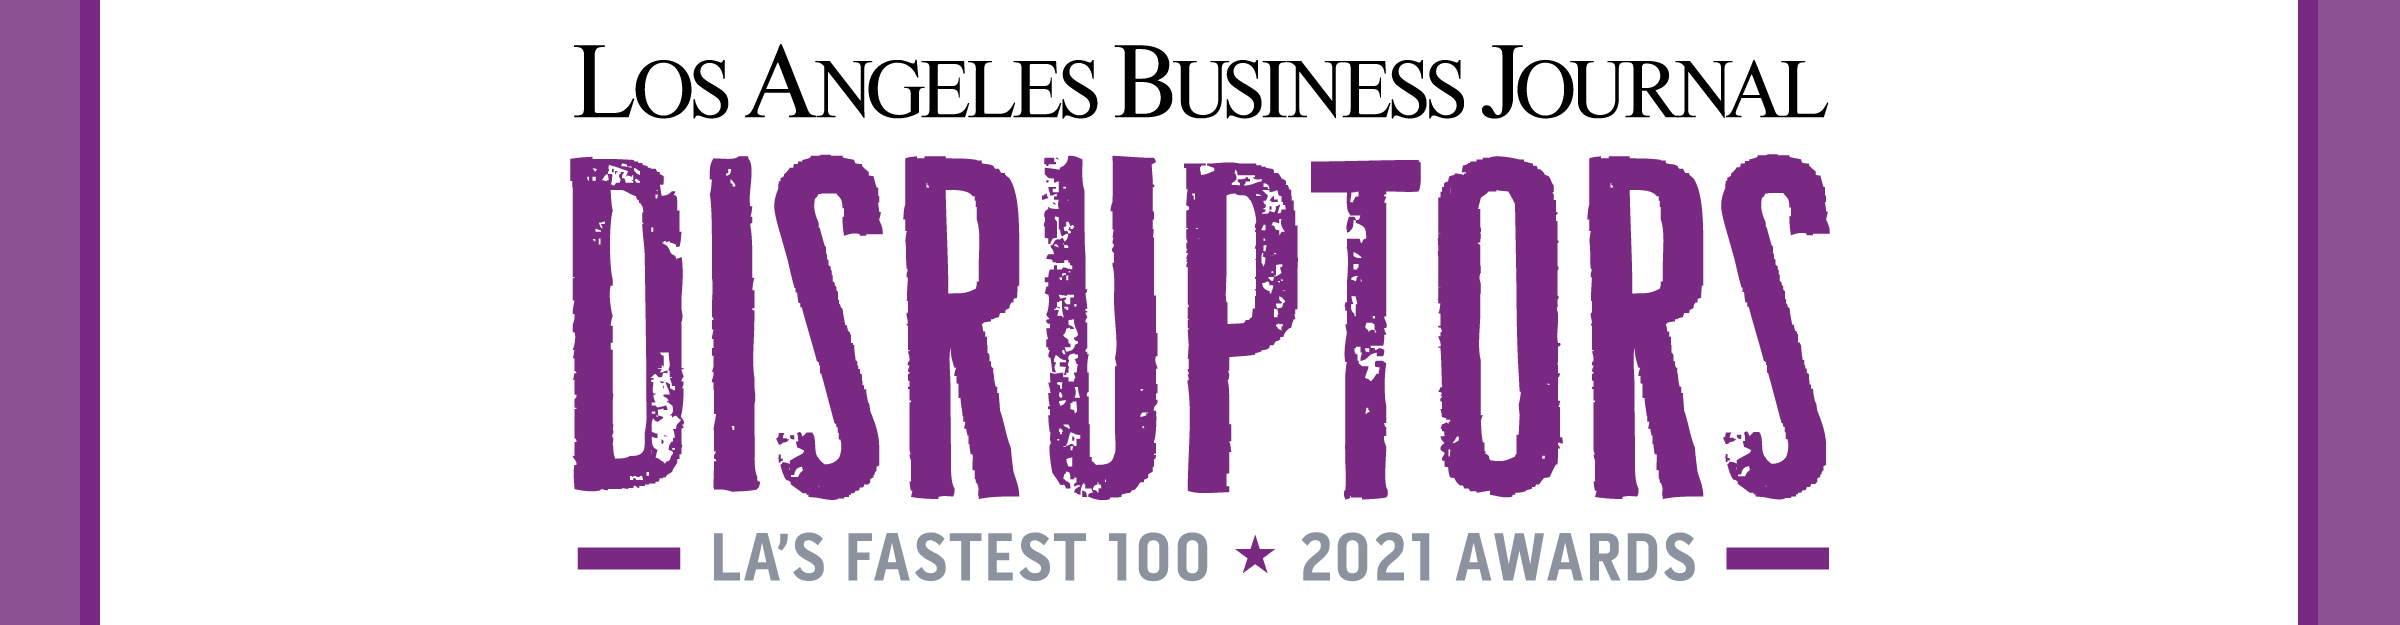 Los Angeles Business Journal Disruptors Awards Event Banner